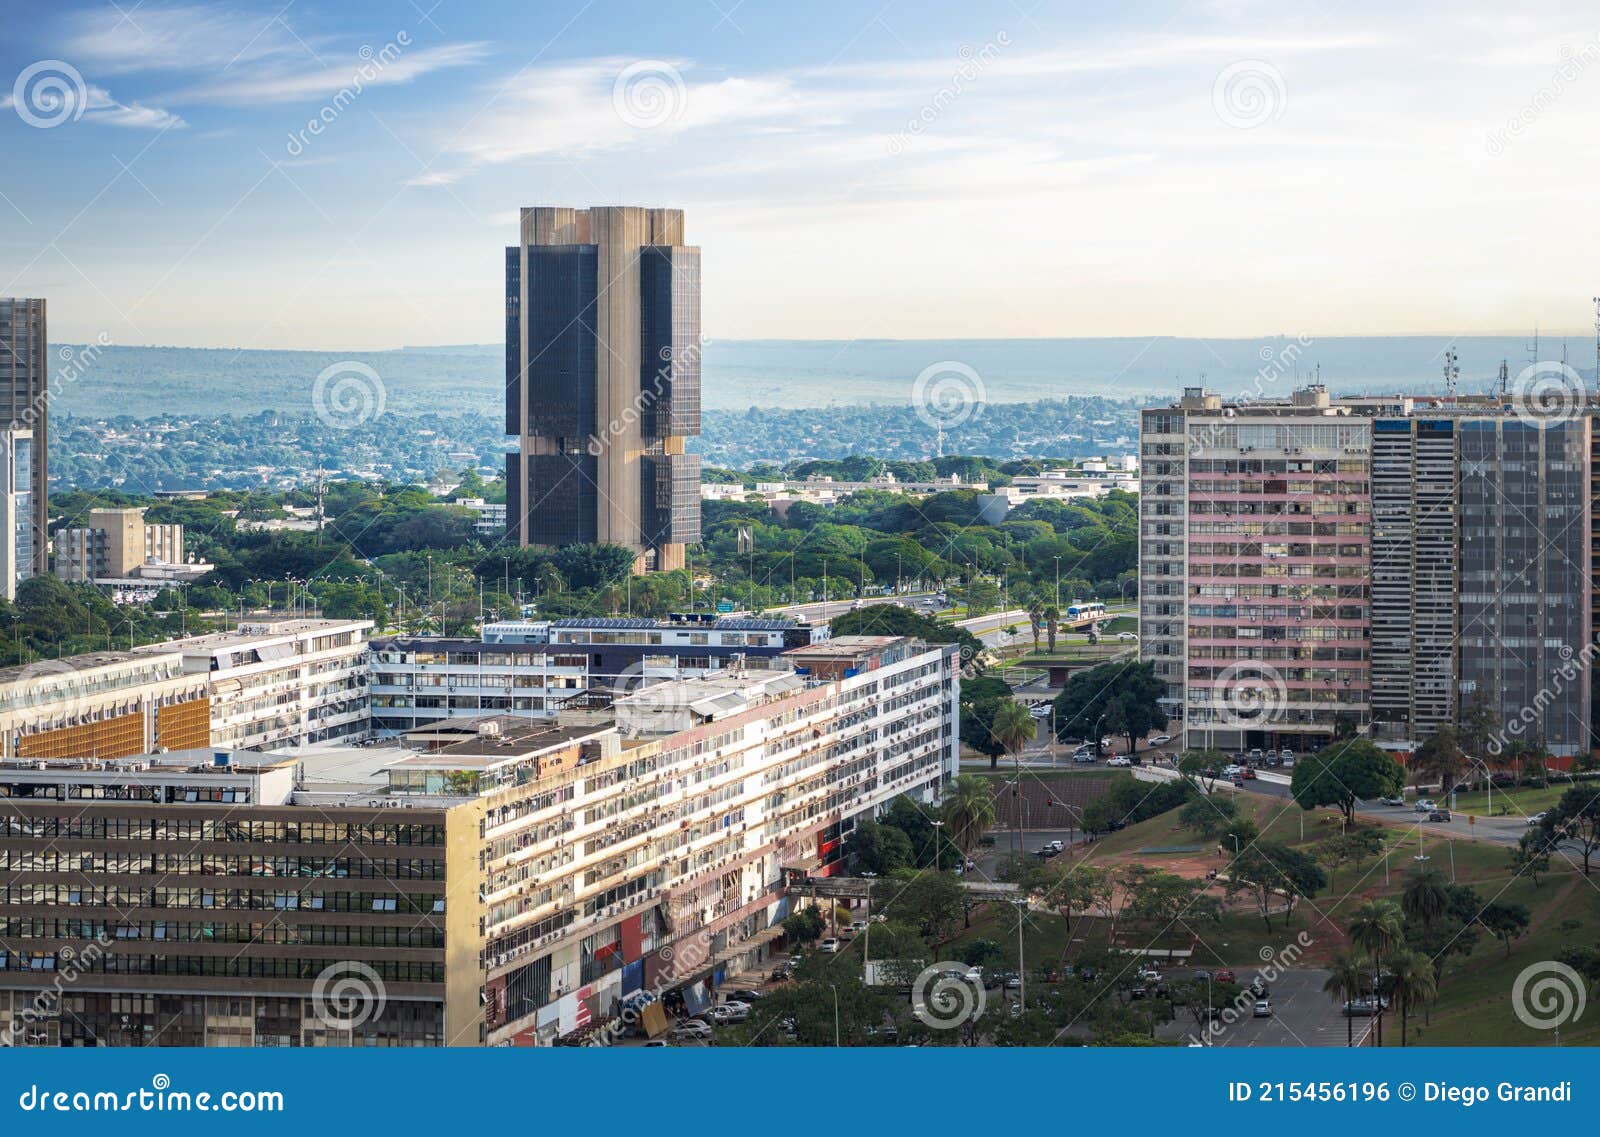 aerial view of brasilia and central bank of brazil headquarters building - brasilia, distrito federal, brazil